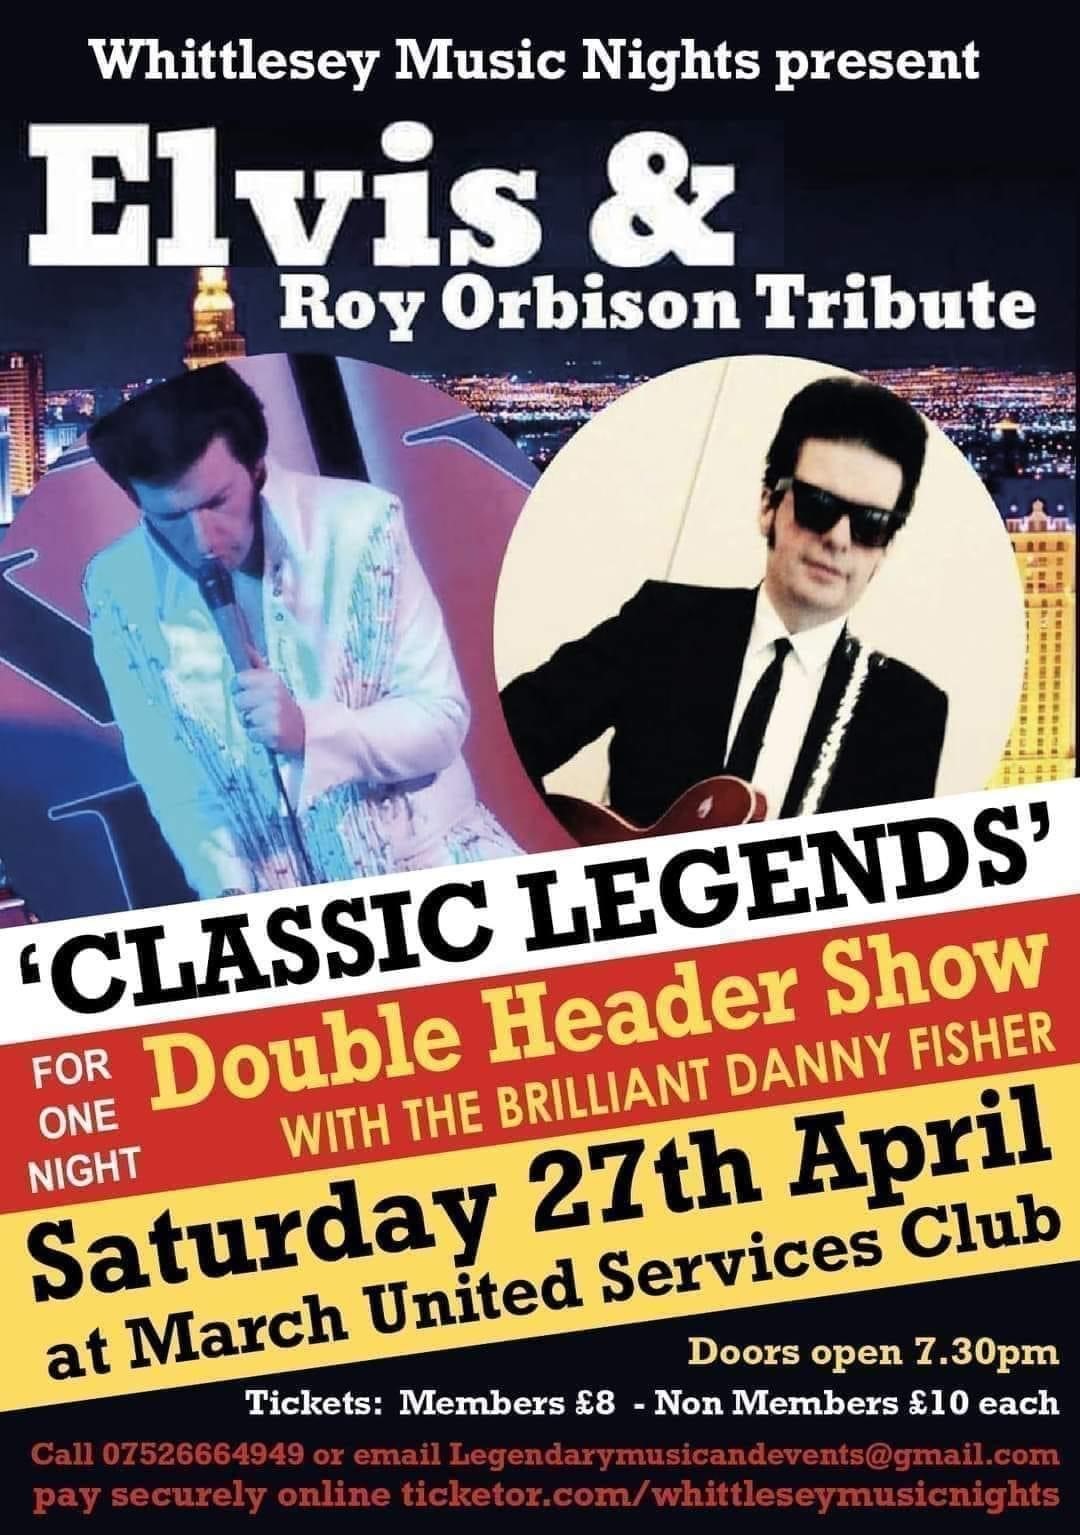 Elvis and Roy Orbison Tribute  on abr. 27, 19:30@March United Services Club - Compra entradas y obtén información enwhittlesey music nights 